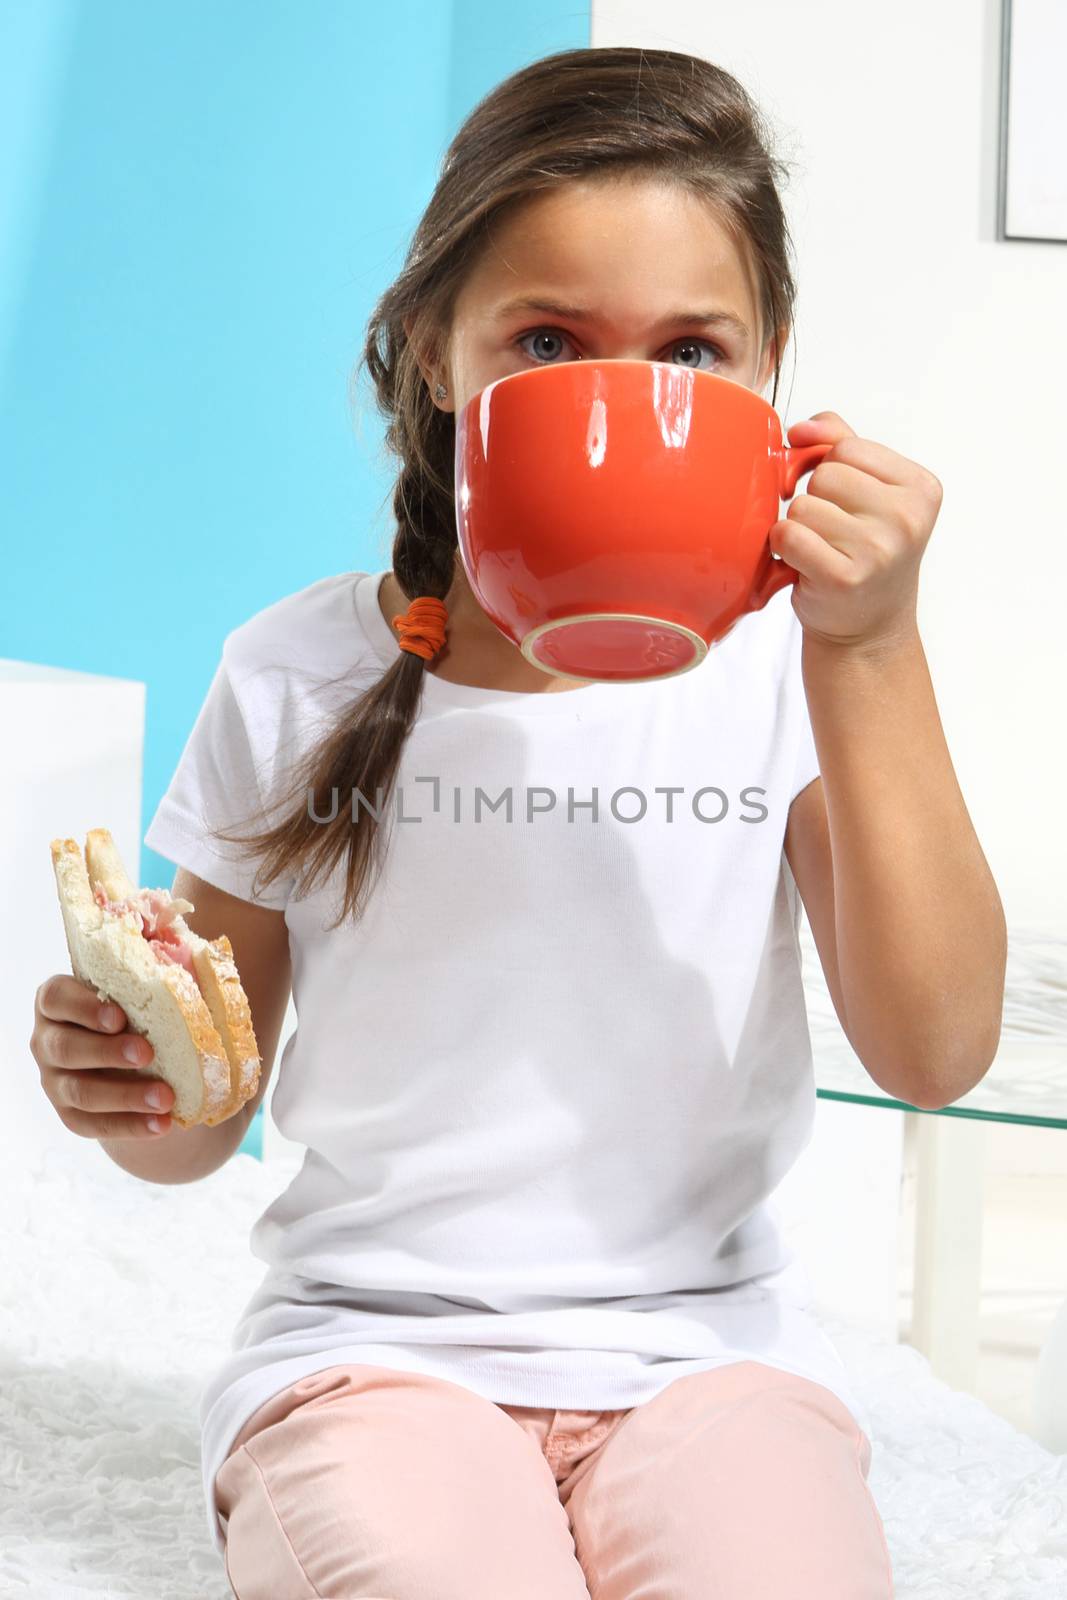 The girl has breakfast by robert_przybysz